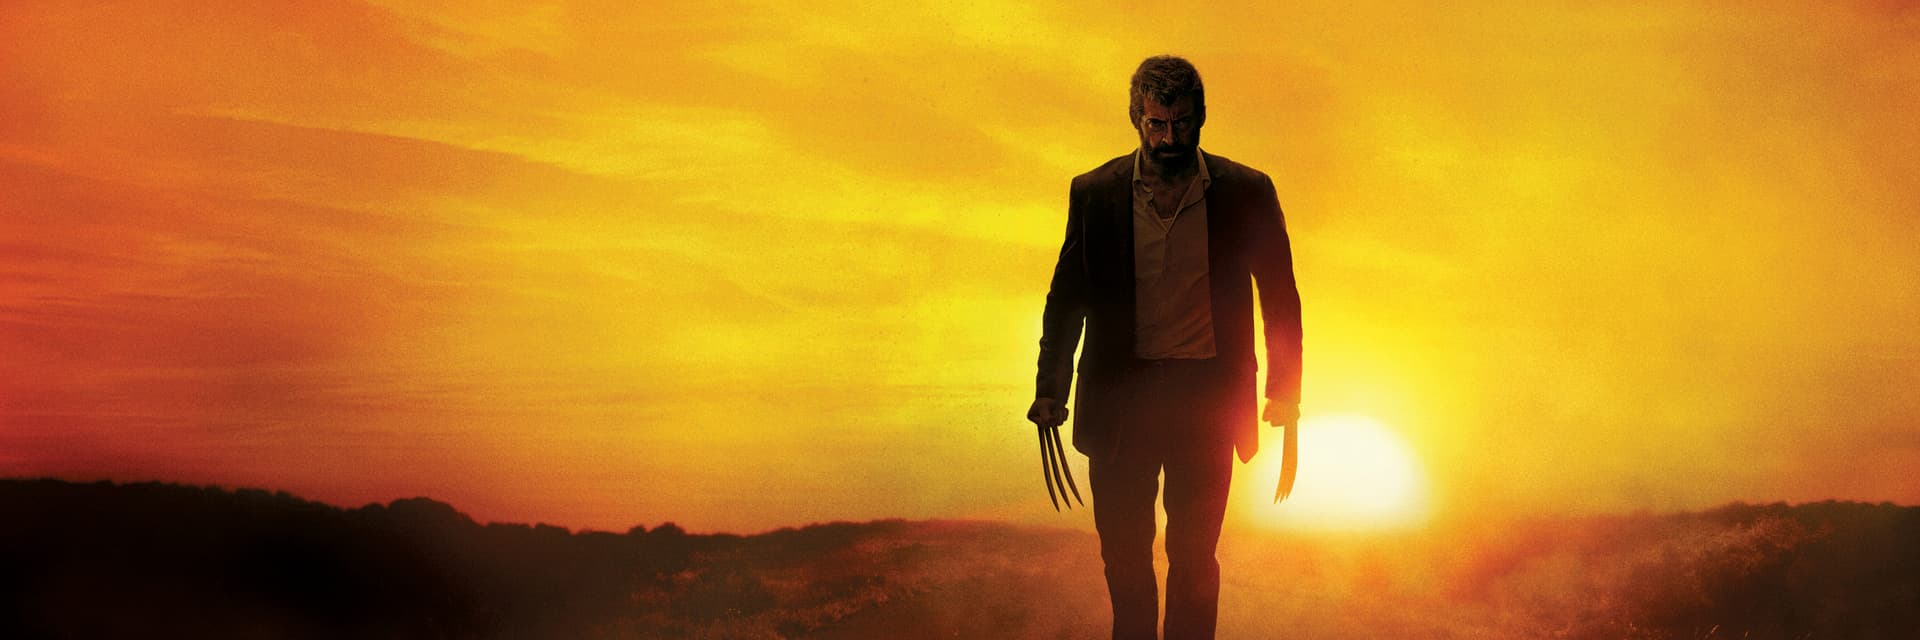 Logan Movie Poster